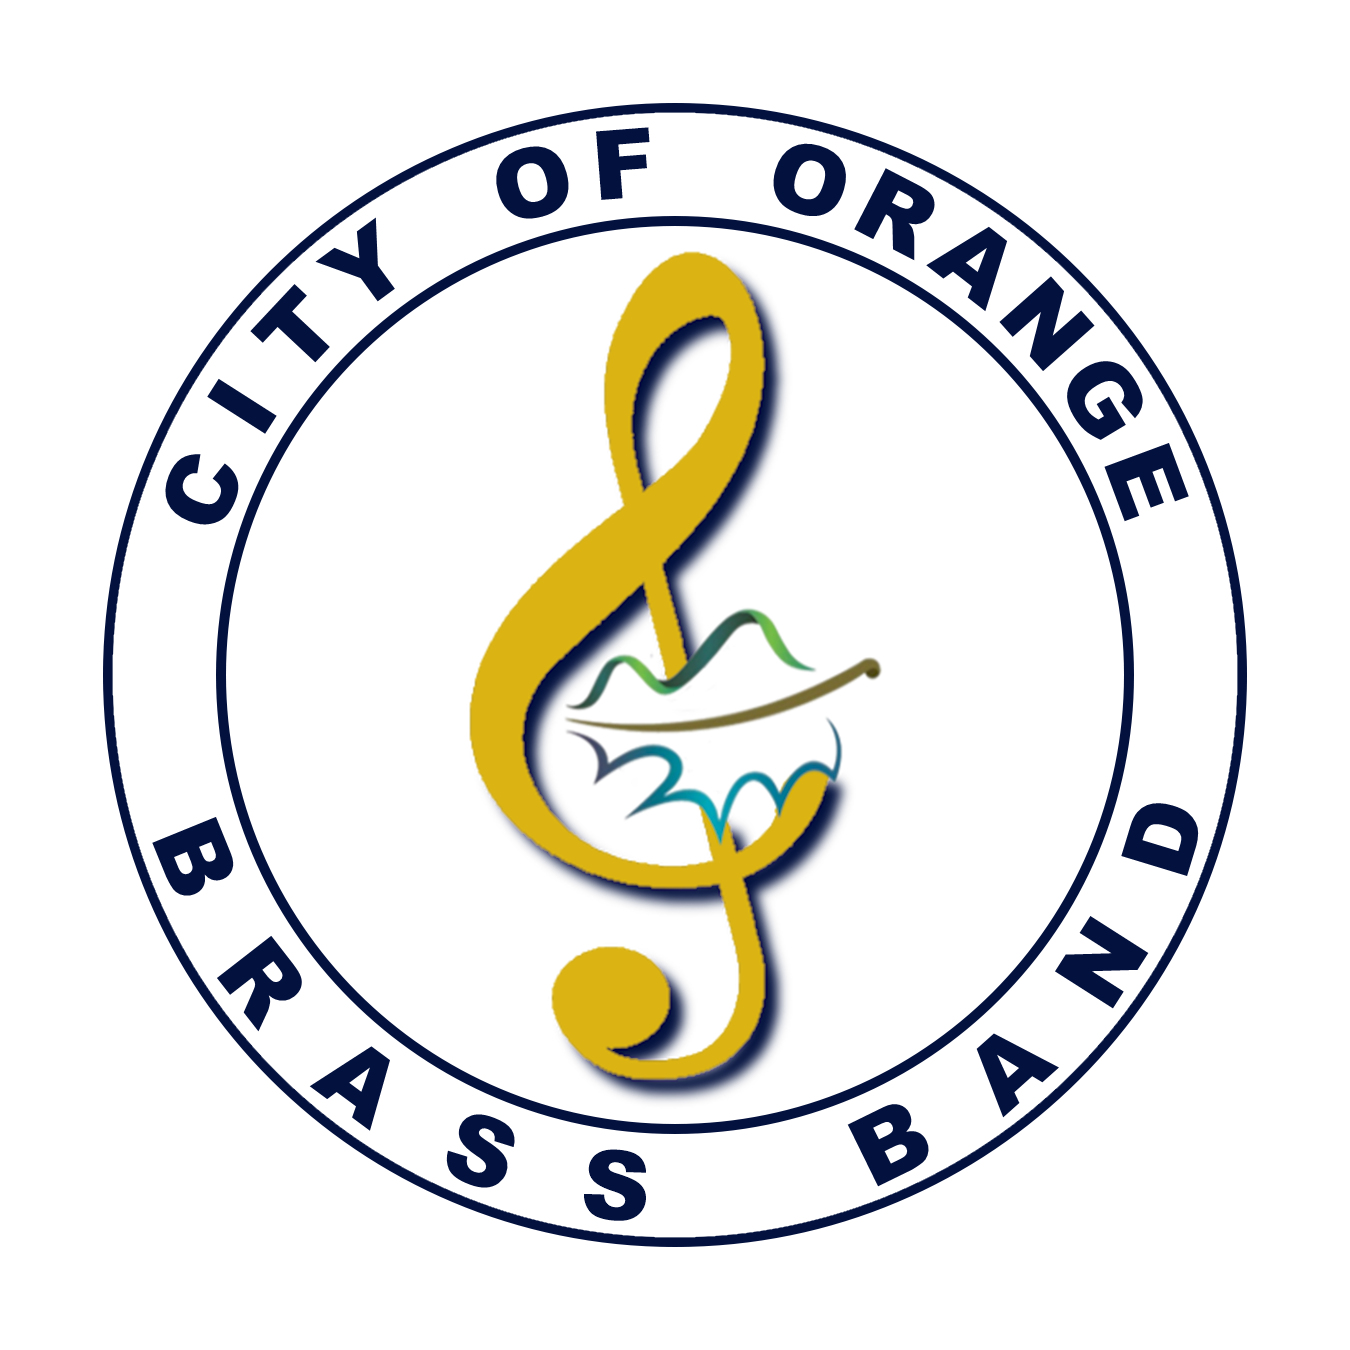 City of Orange Brass Band